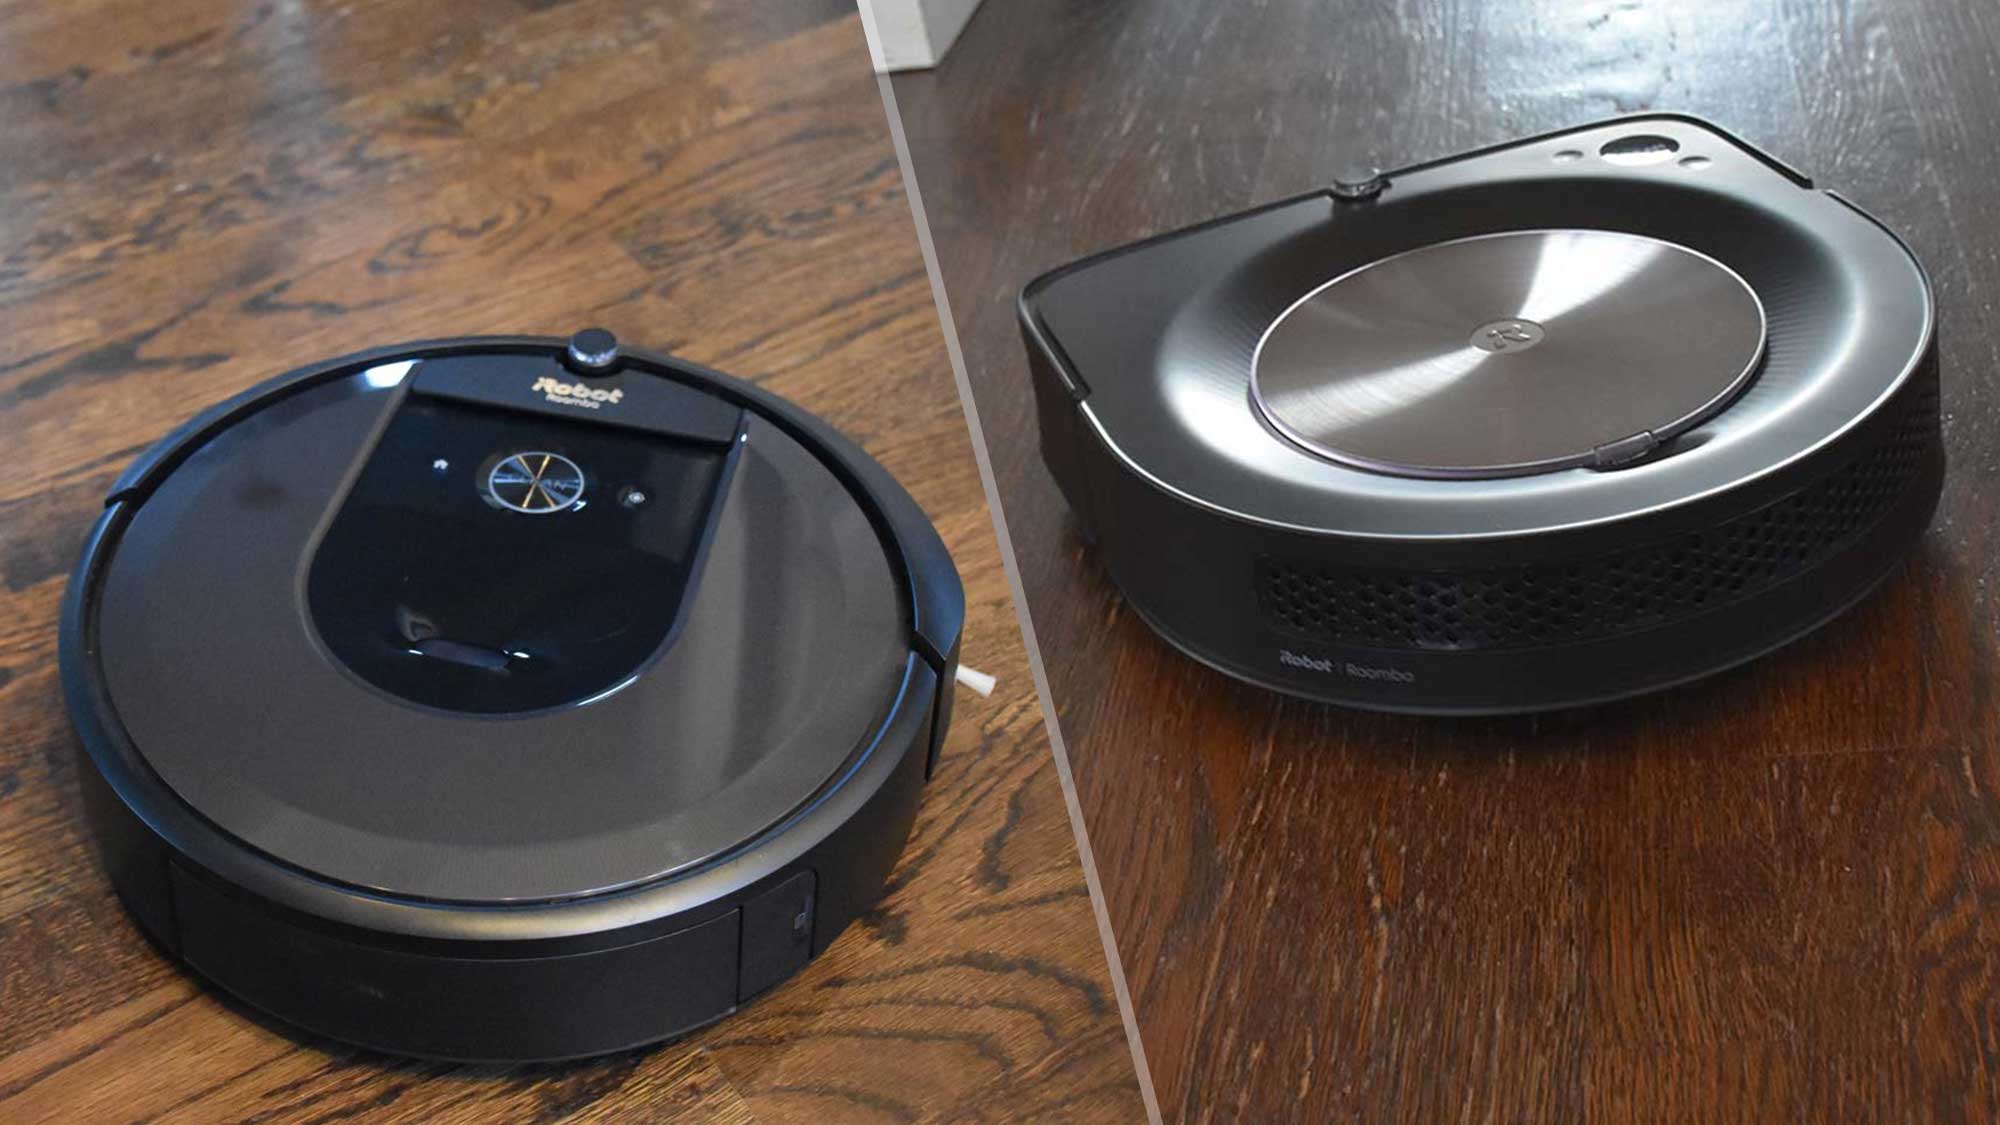 iRobot Roomba s9+ vs. iRobot Roomba i7+: Which is best for pet hair? |  Tom's Guide